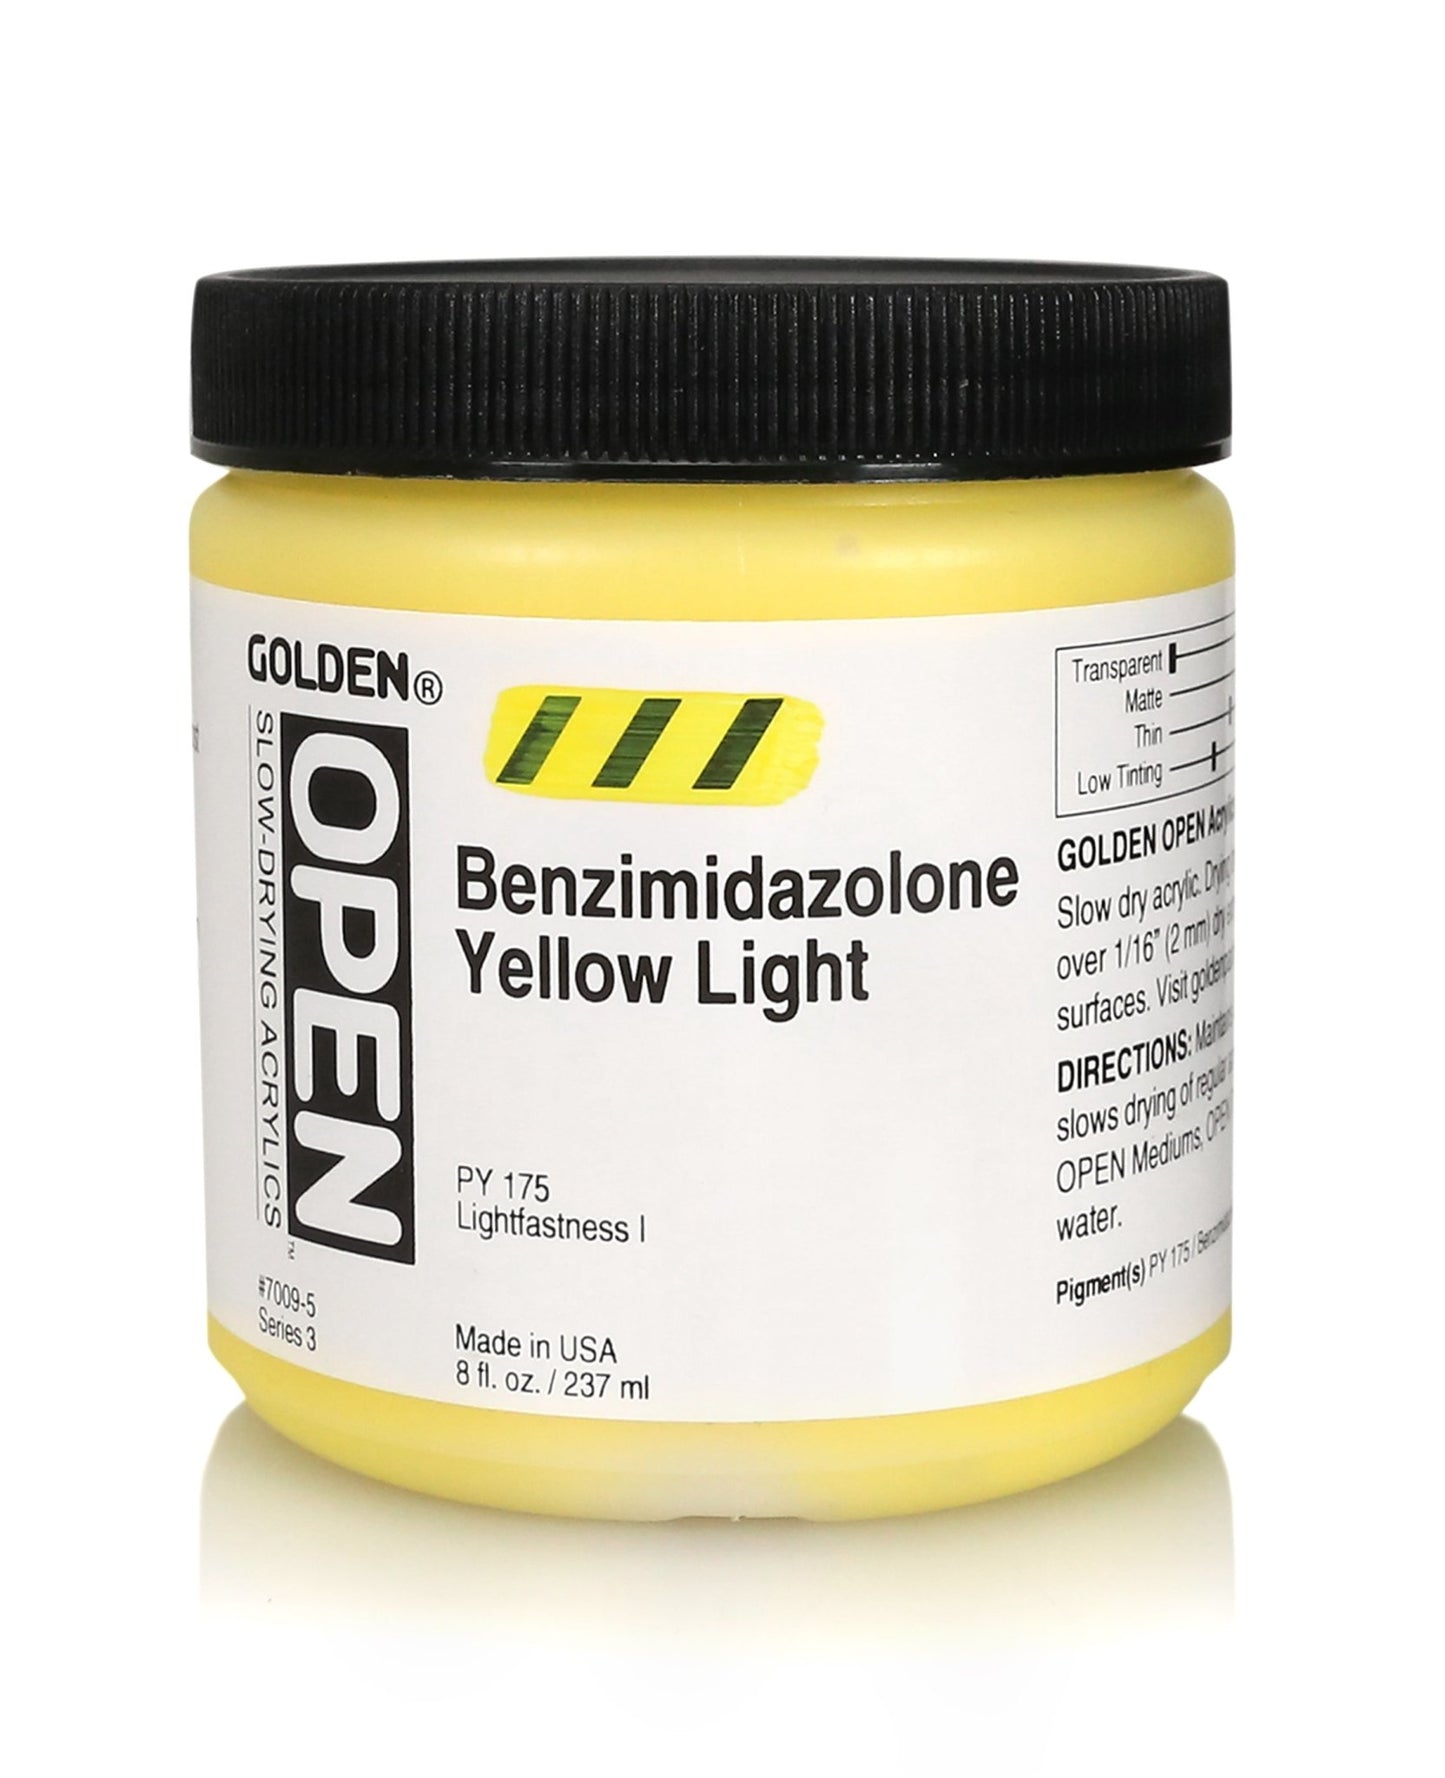 Golden Open Acrylics 237ml Benzimidazoline Yellow Light - theartshop.com.au